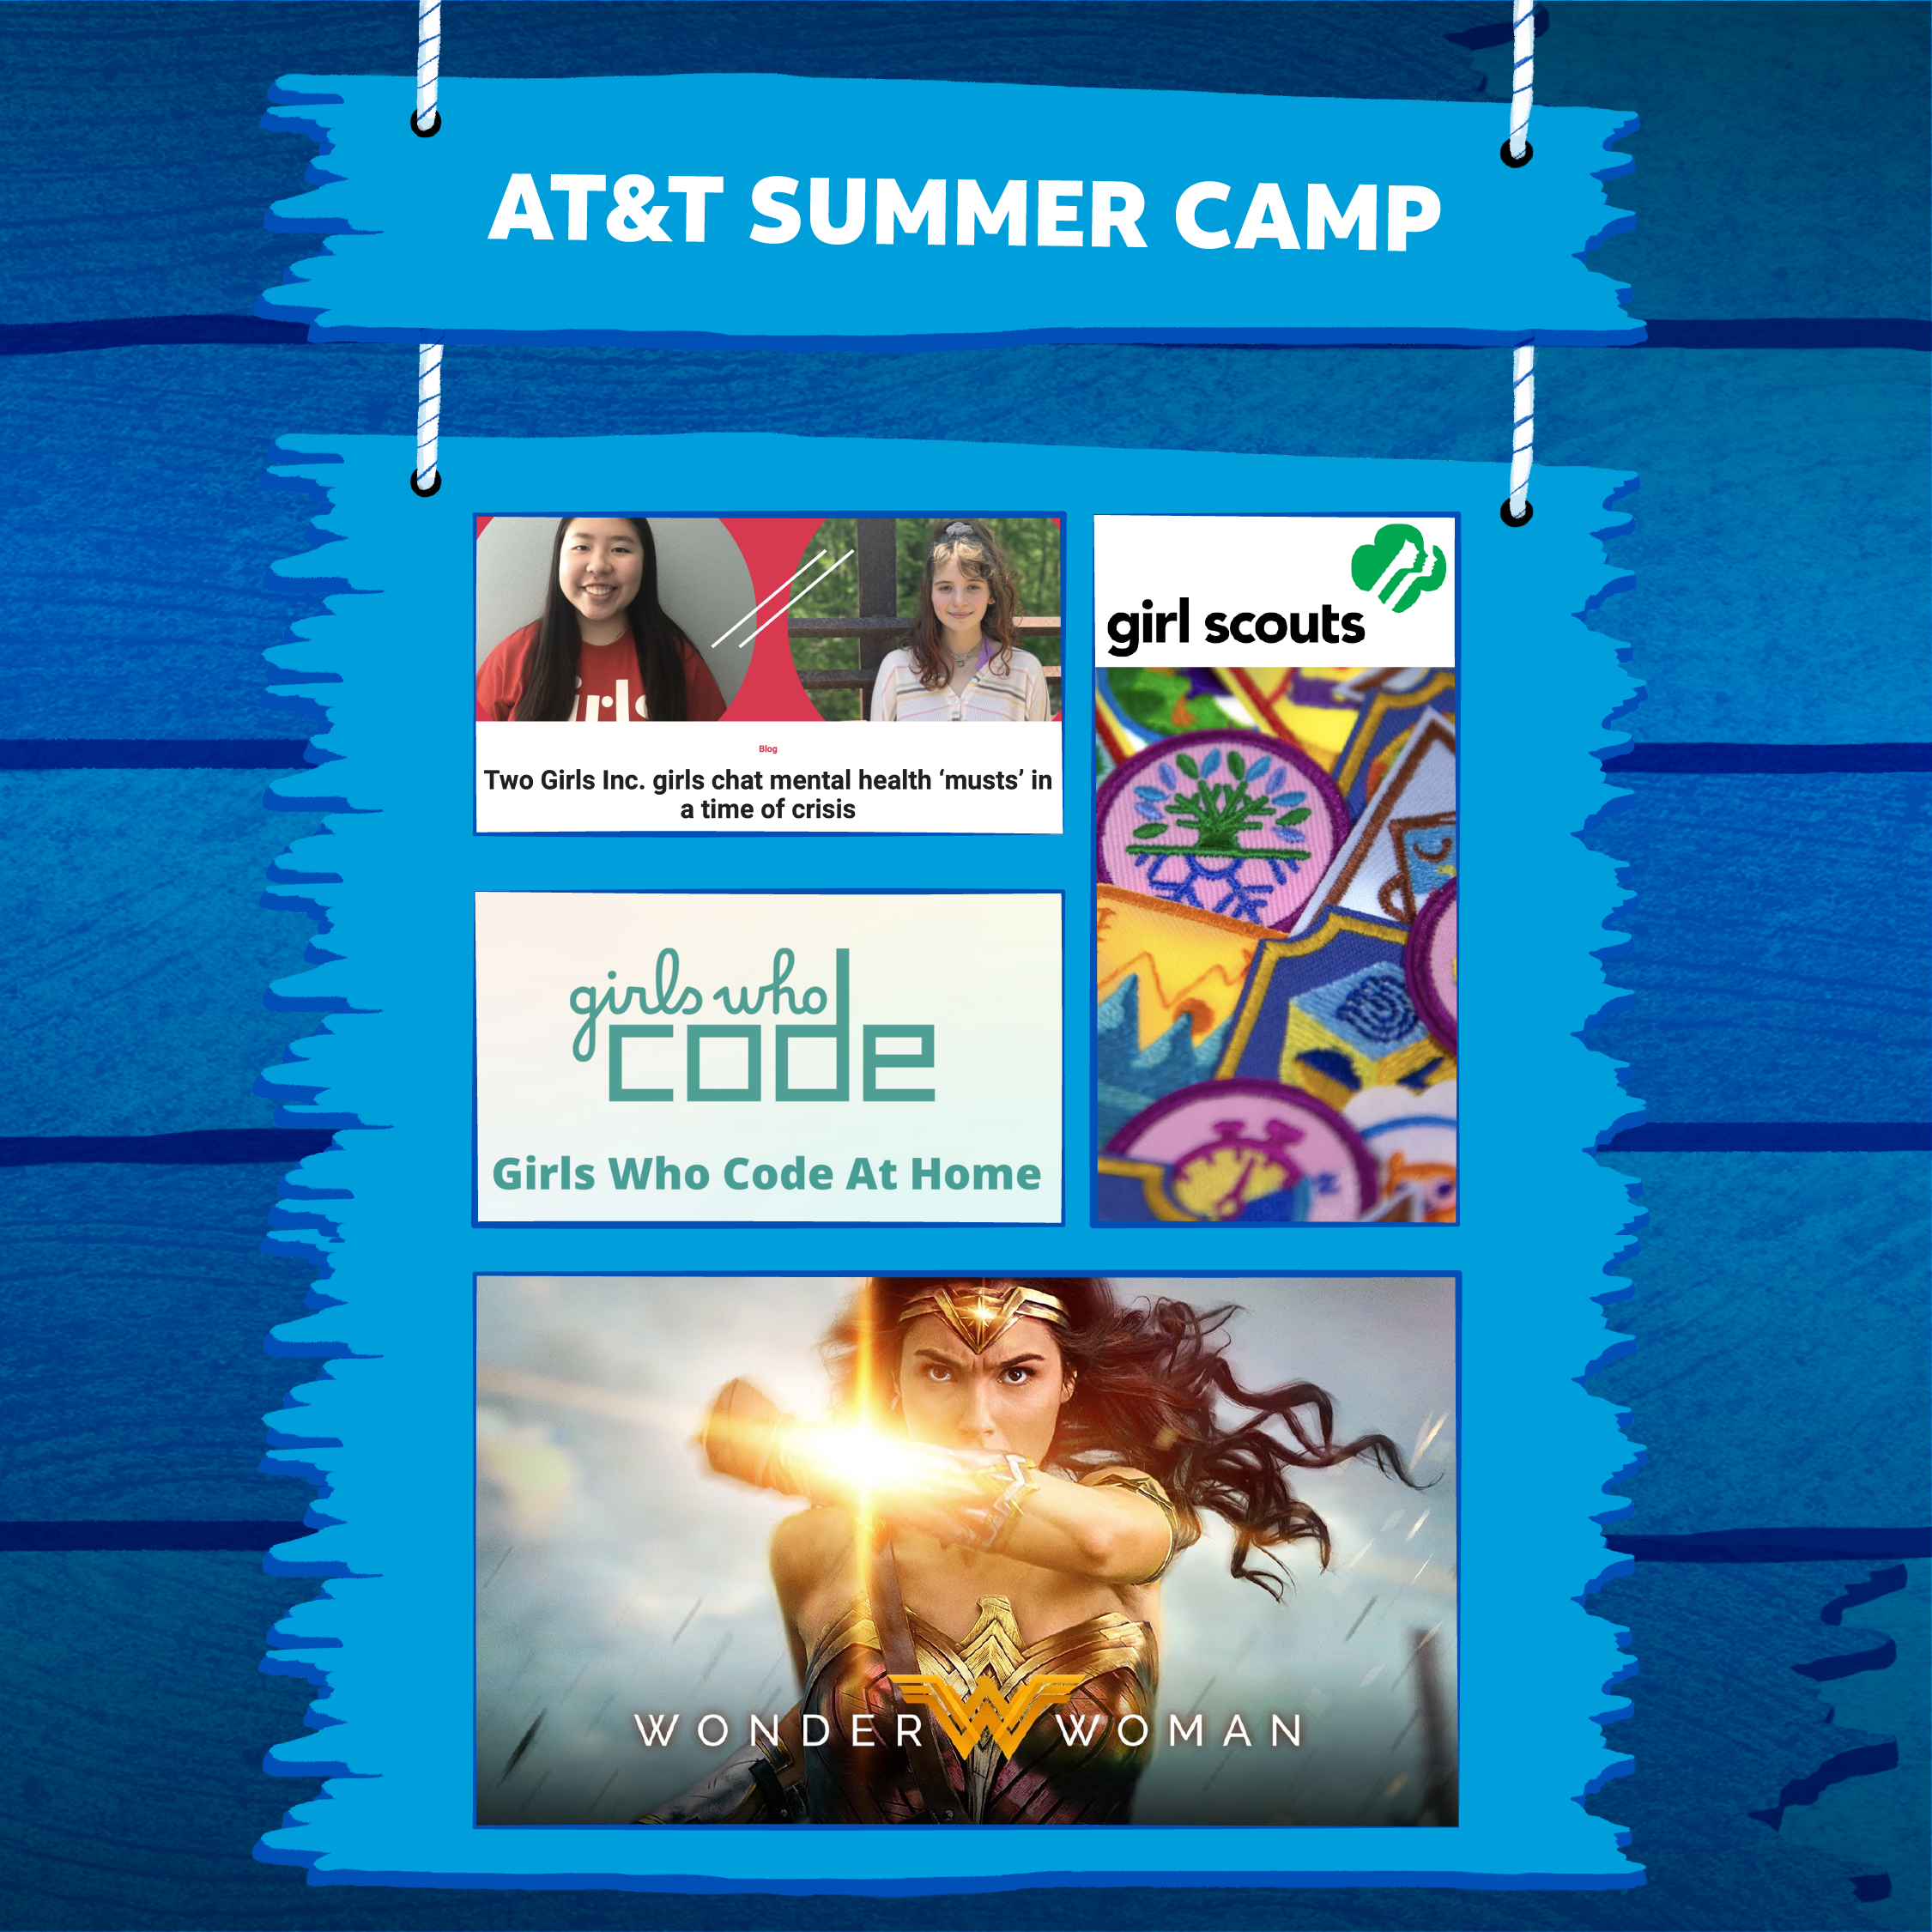 Introducing AT&T Summer Camp